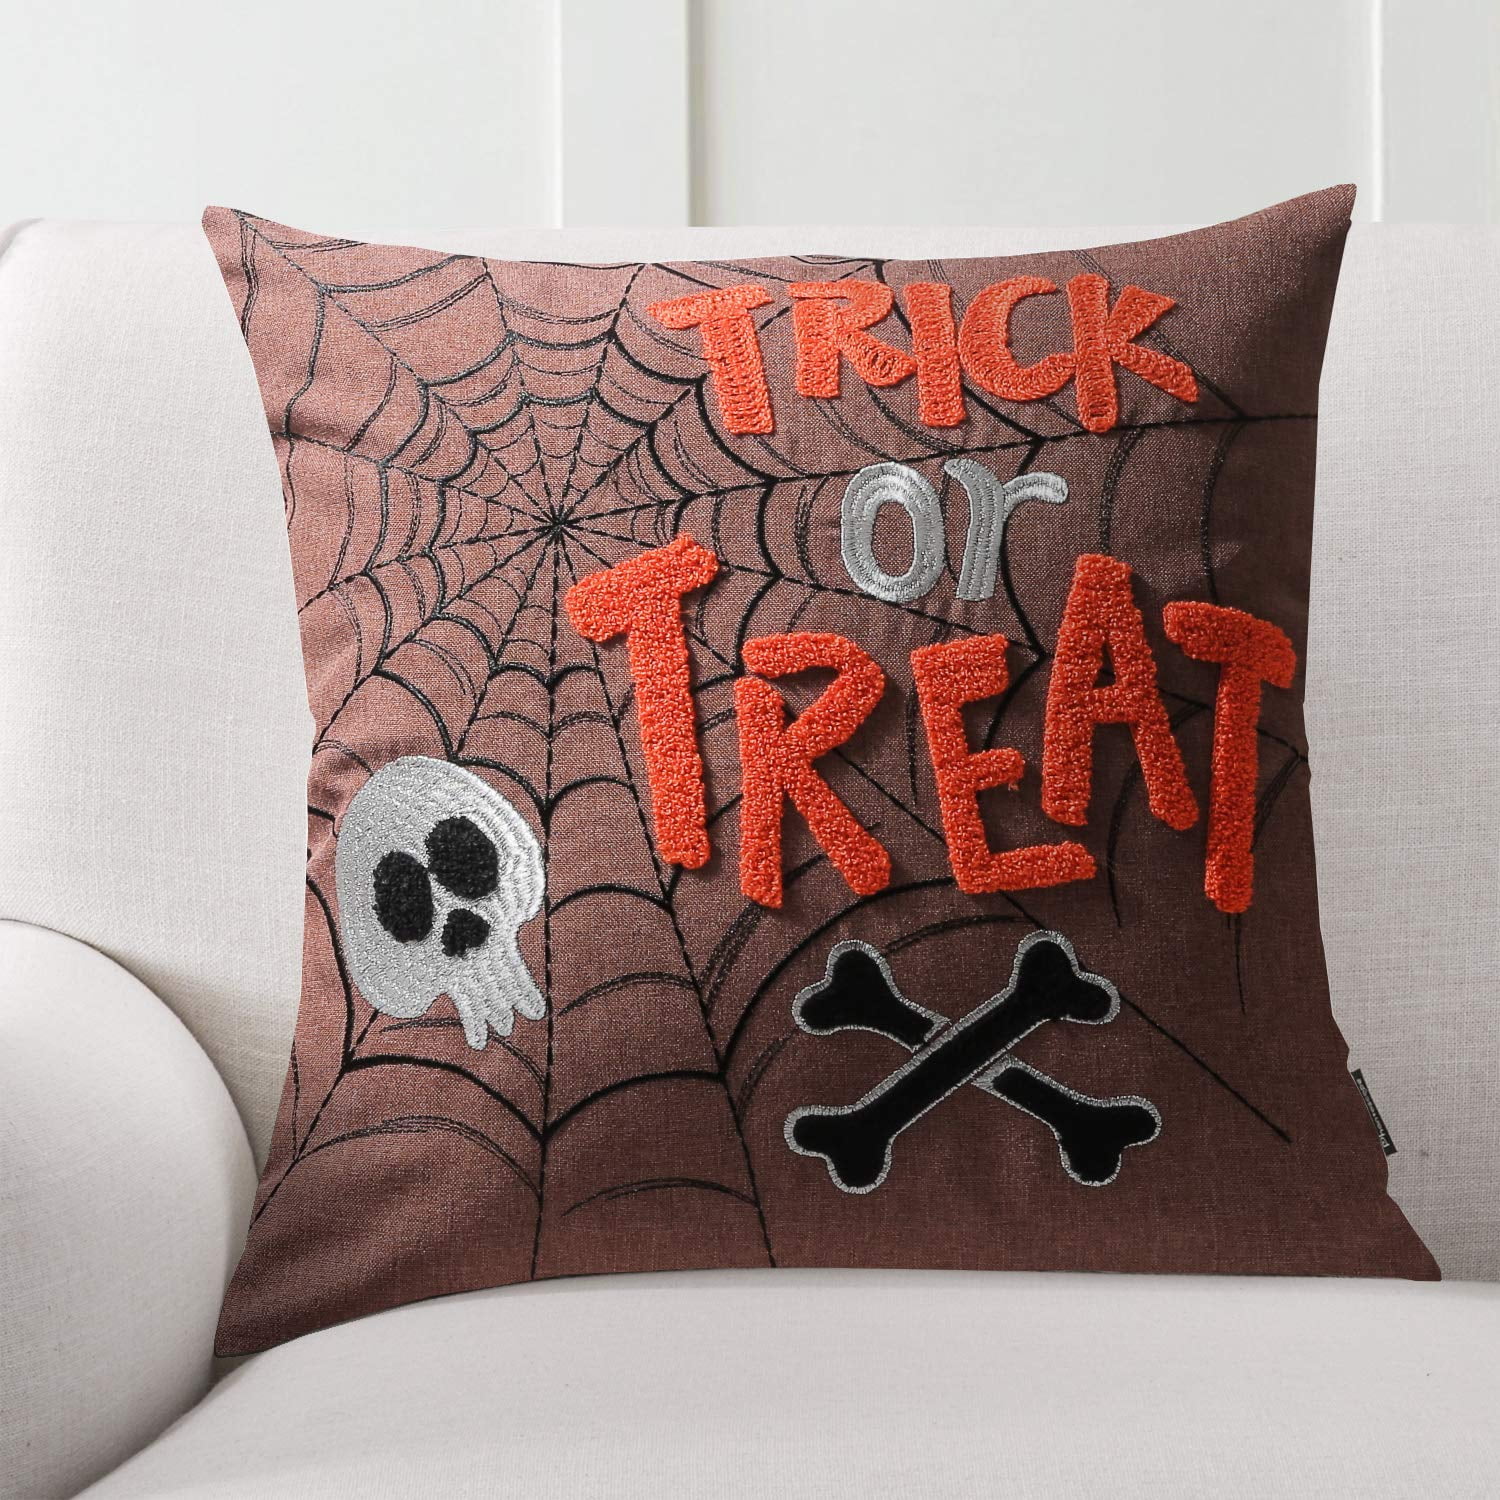 Designs Direct Orange Halloween Truck 18 Throw Pillow